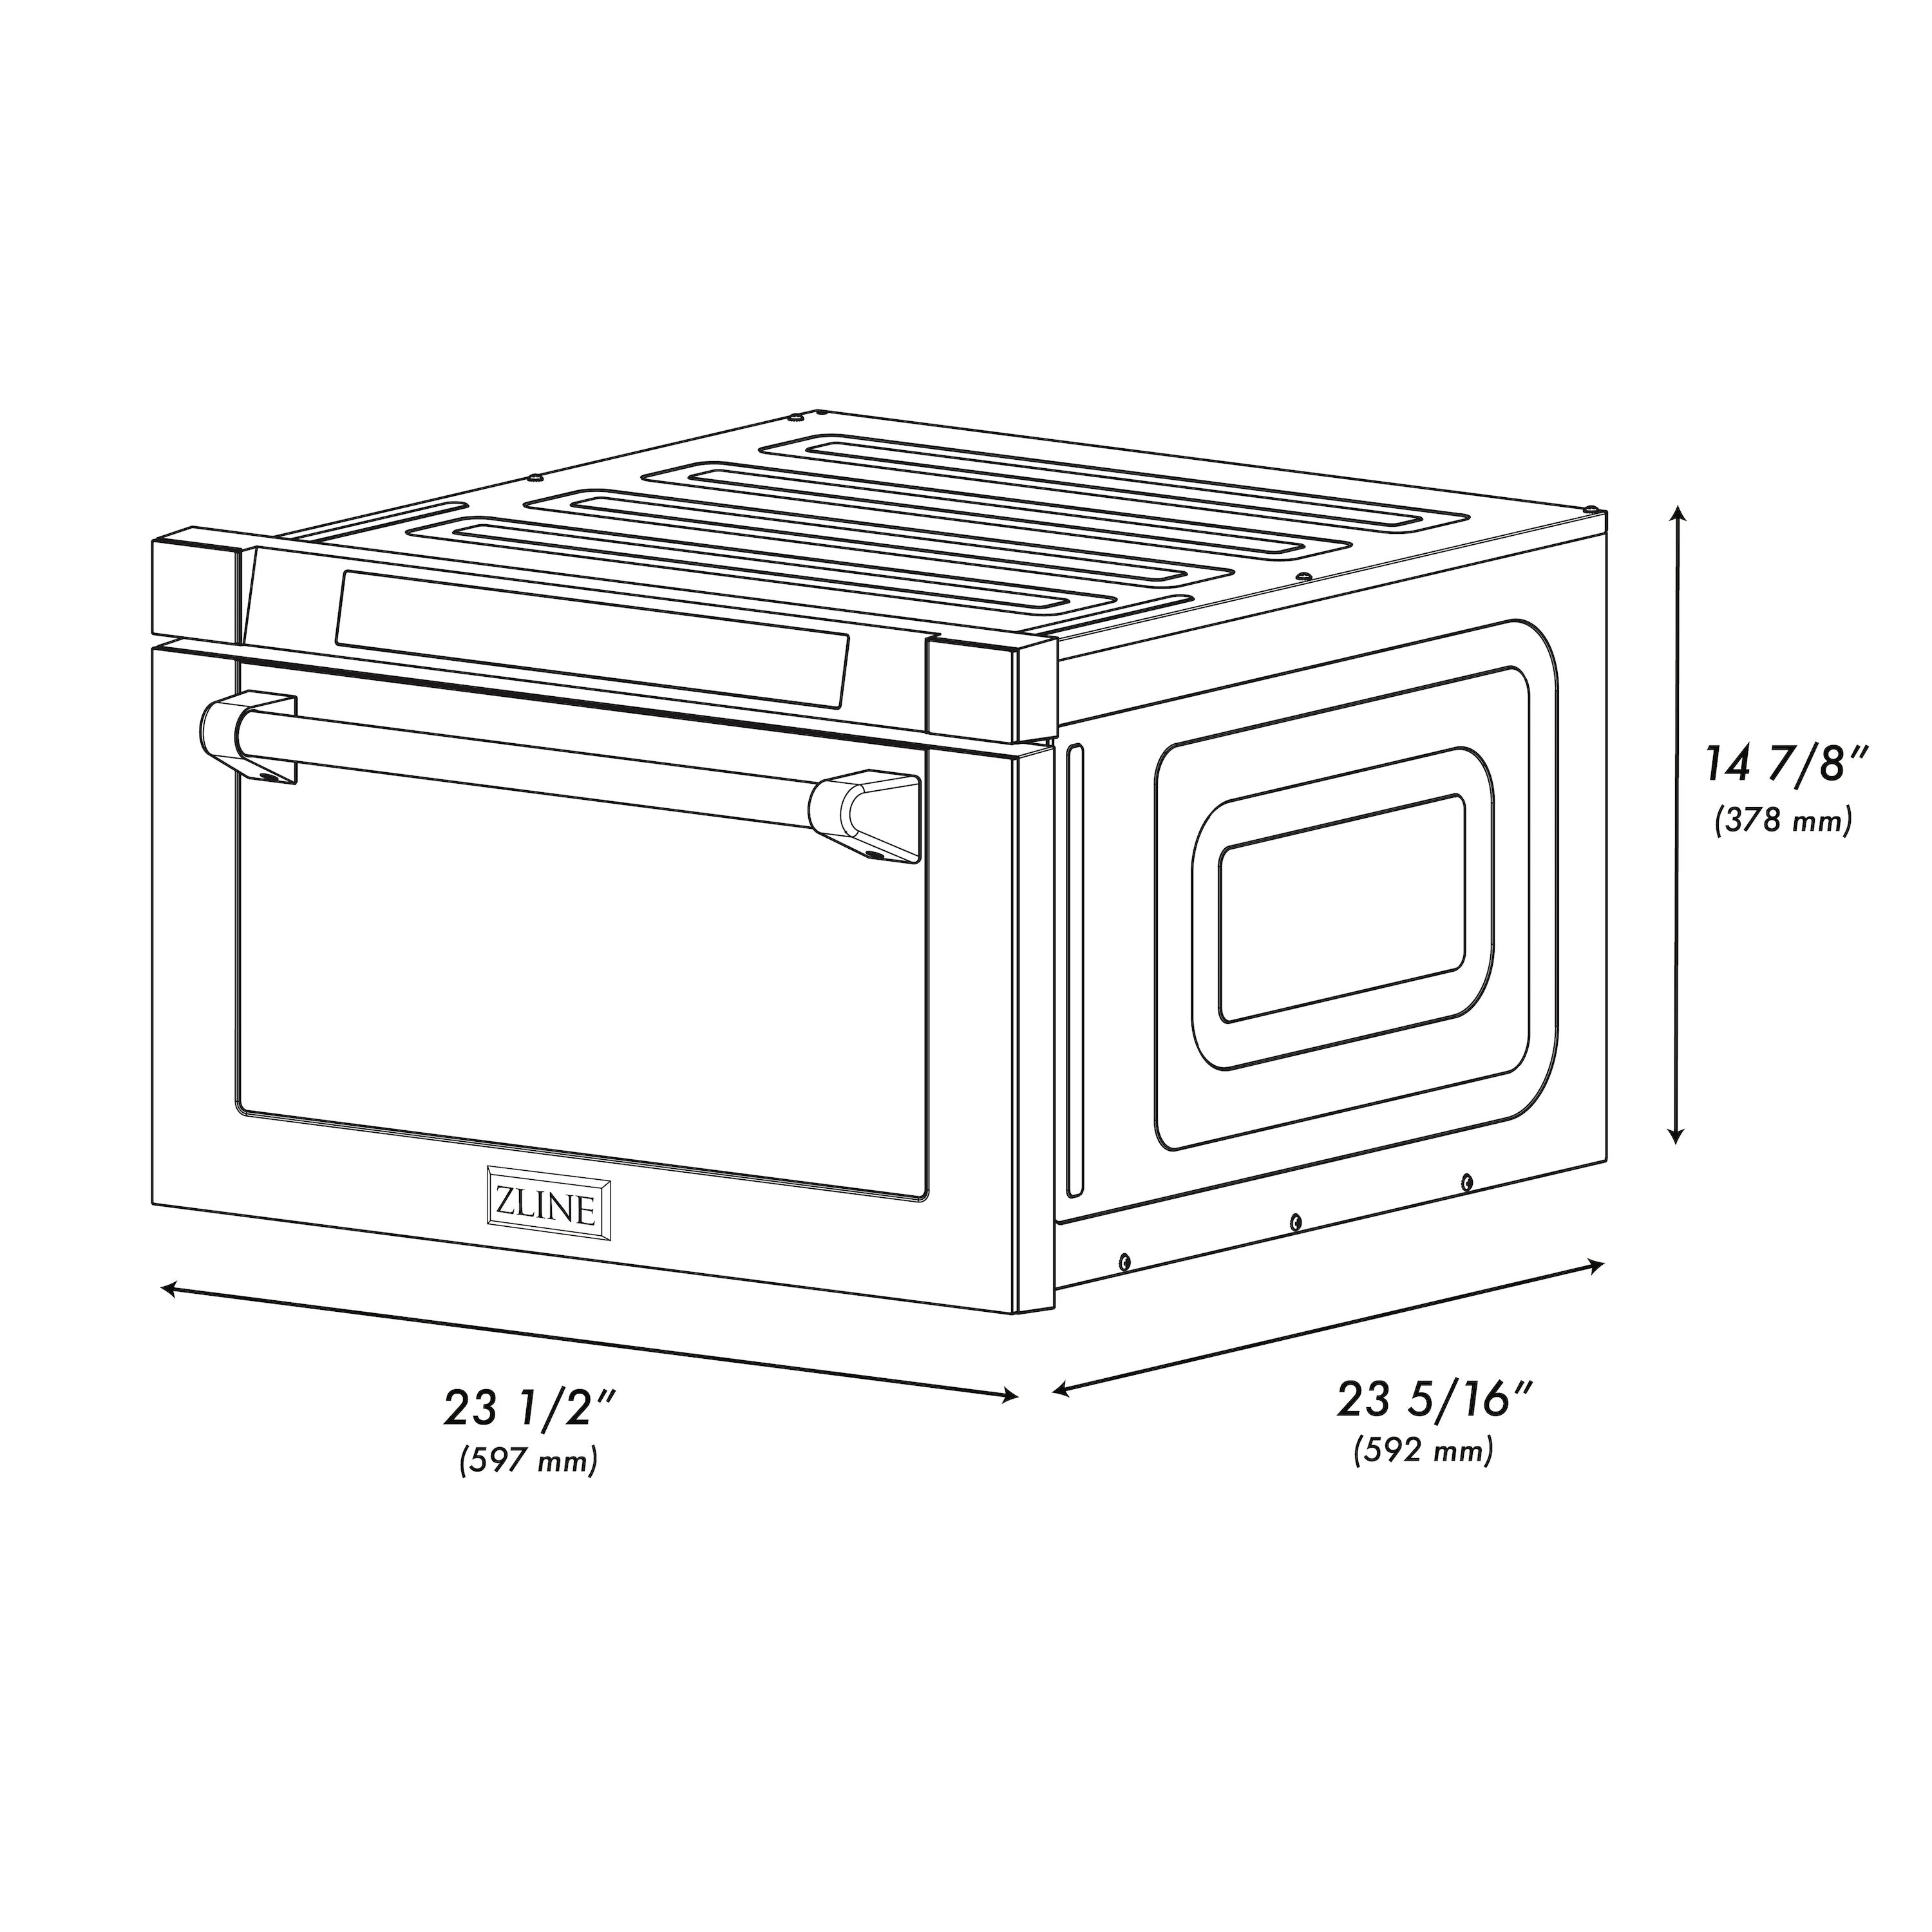 ZLINE 24" Microwave Drawer dimensional diagram.